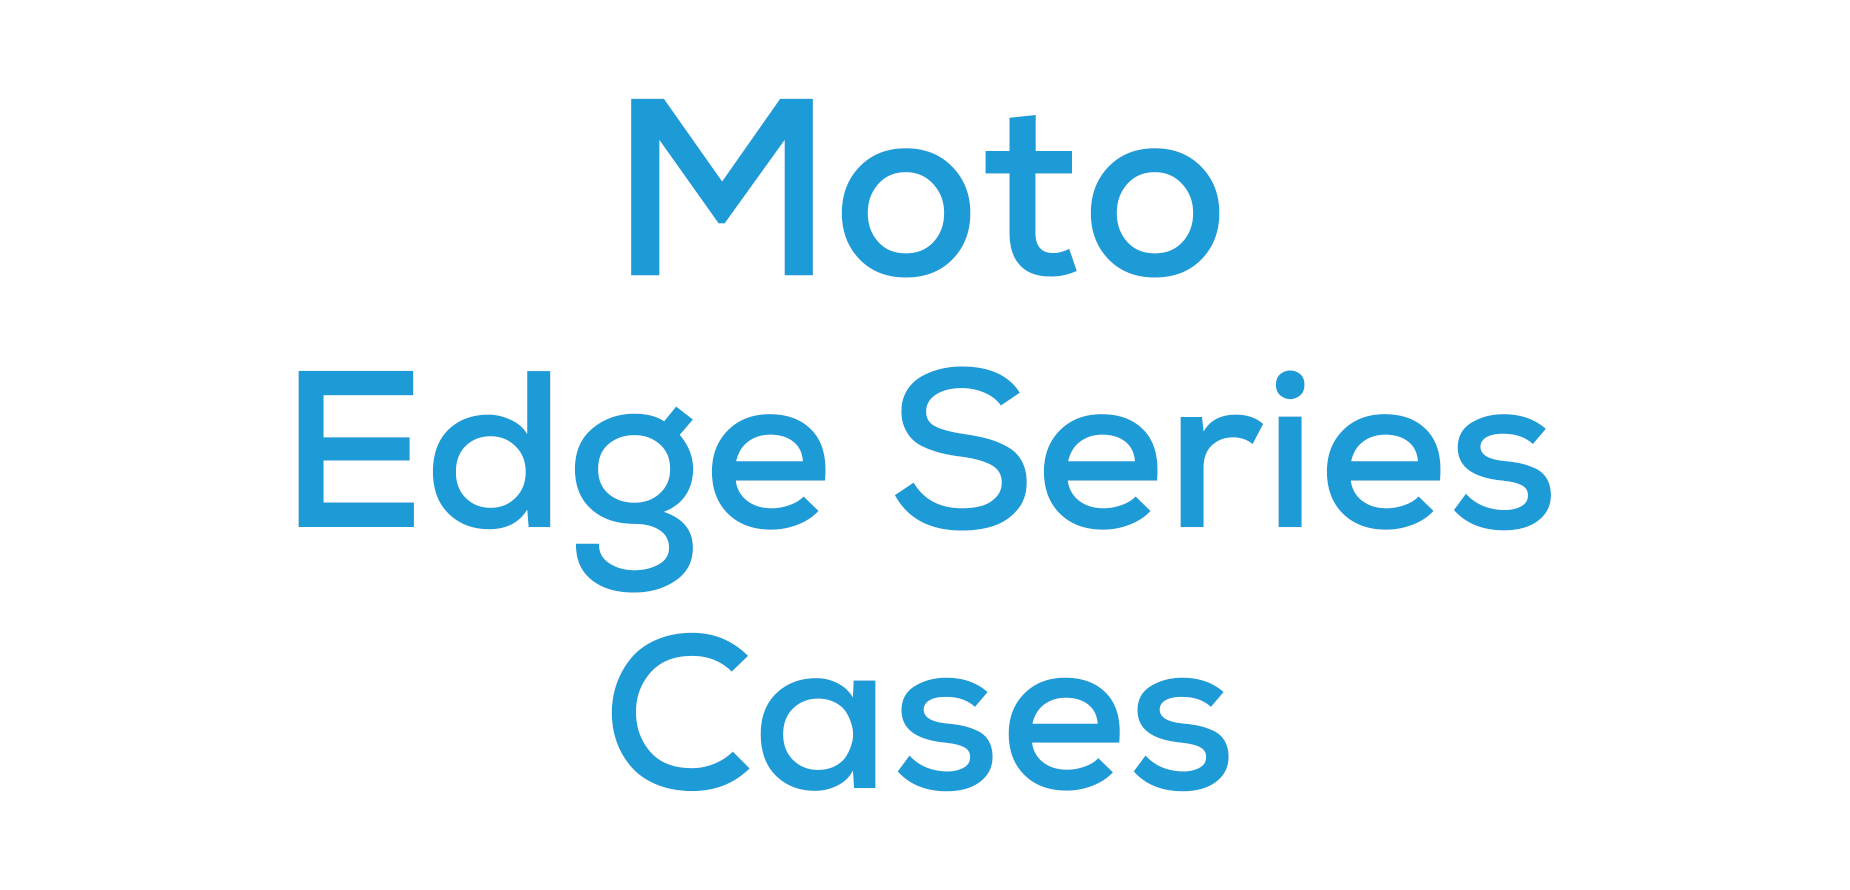 Moto Edge Series Cases